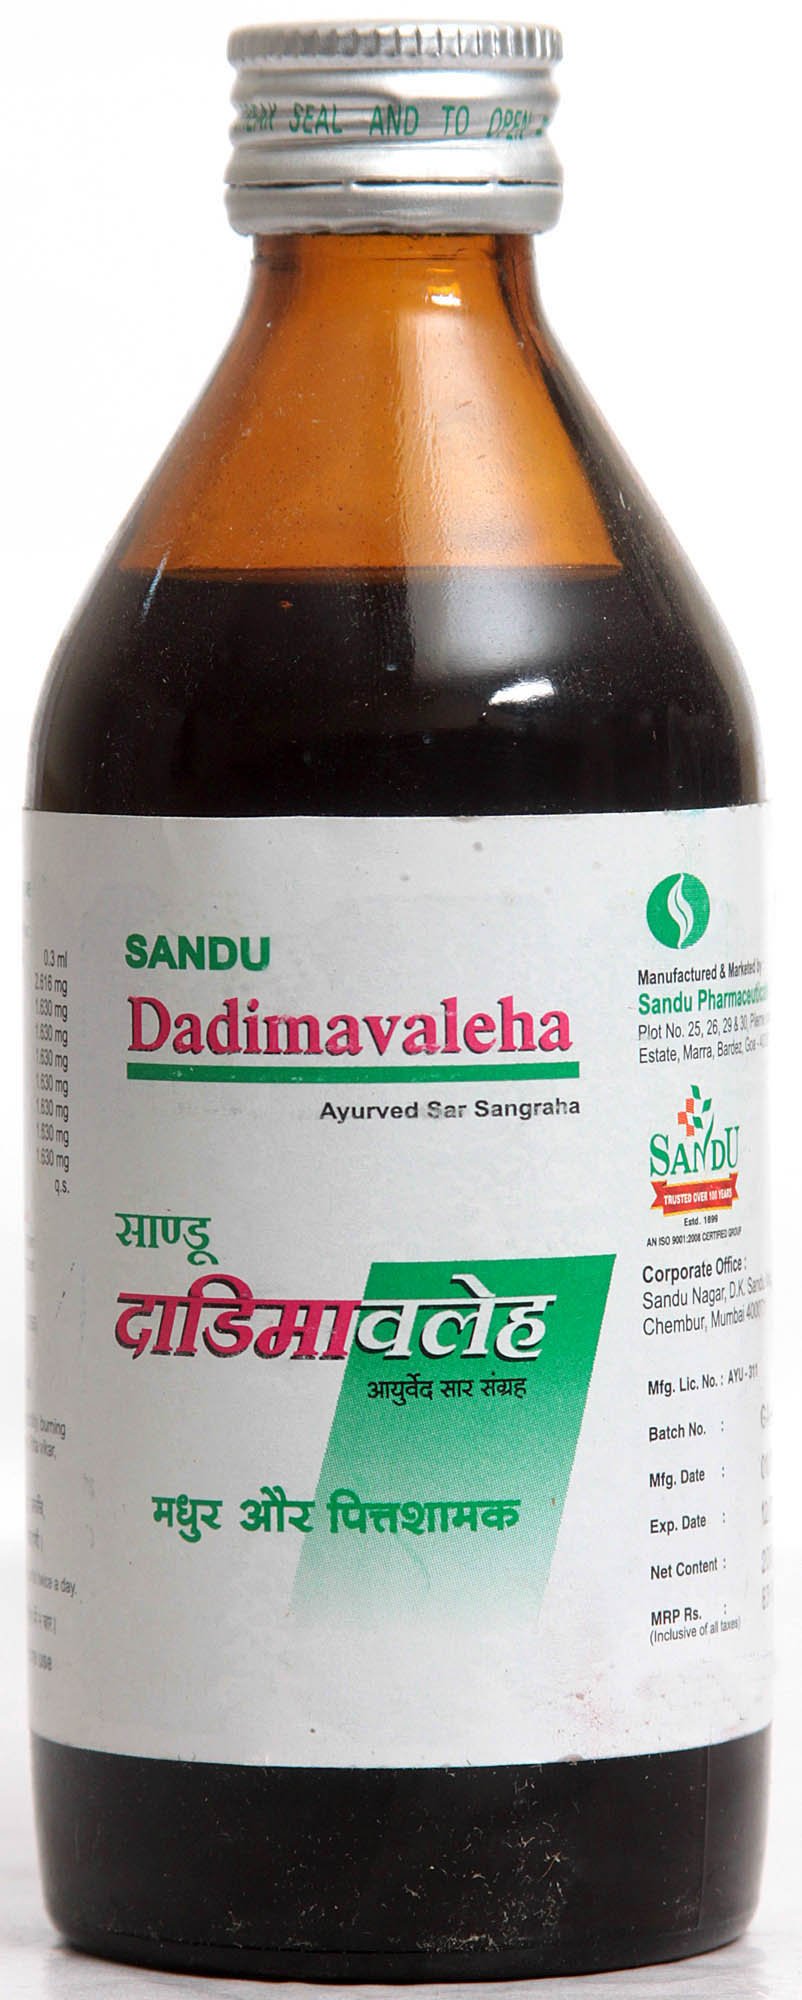 Dadimavaleha - book cover